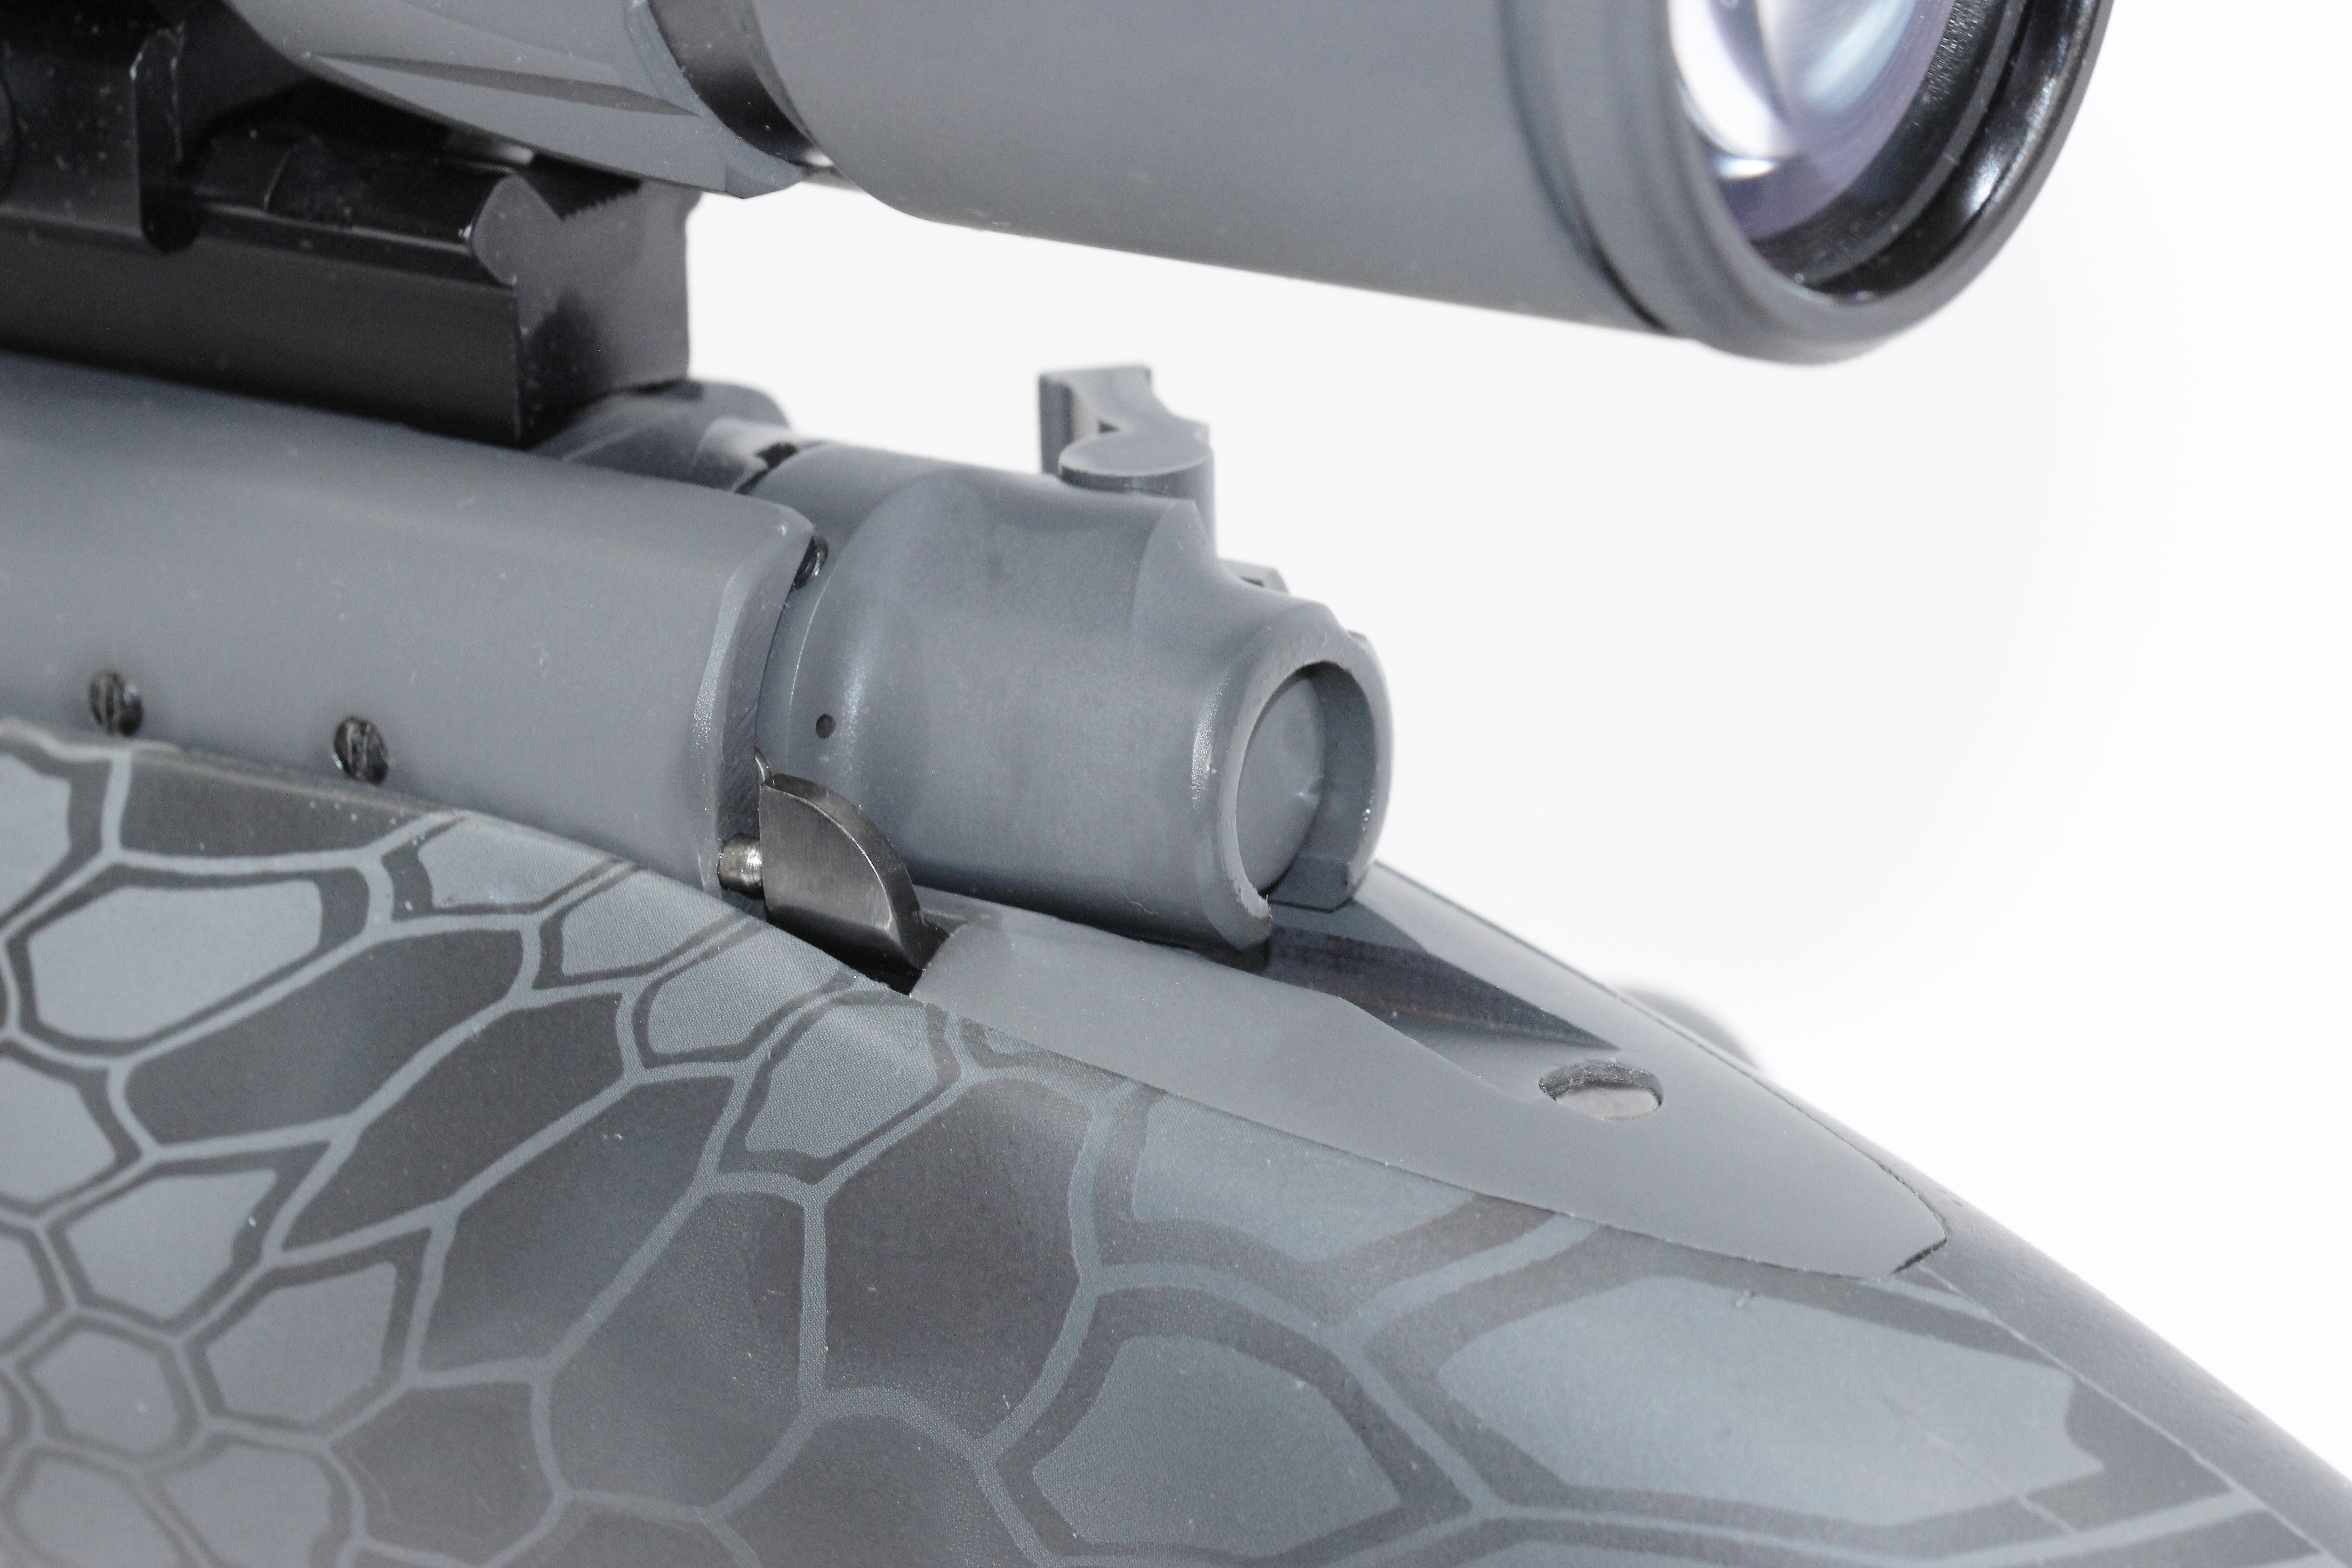 Custom Rifle Build - Ultralight .300 Win Mag